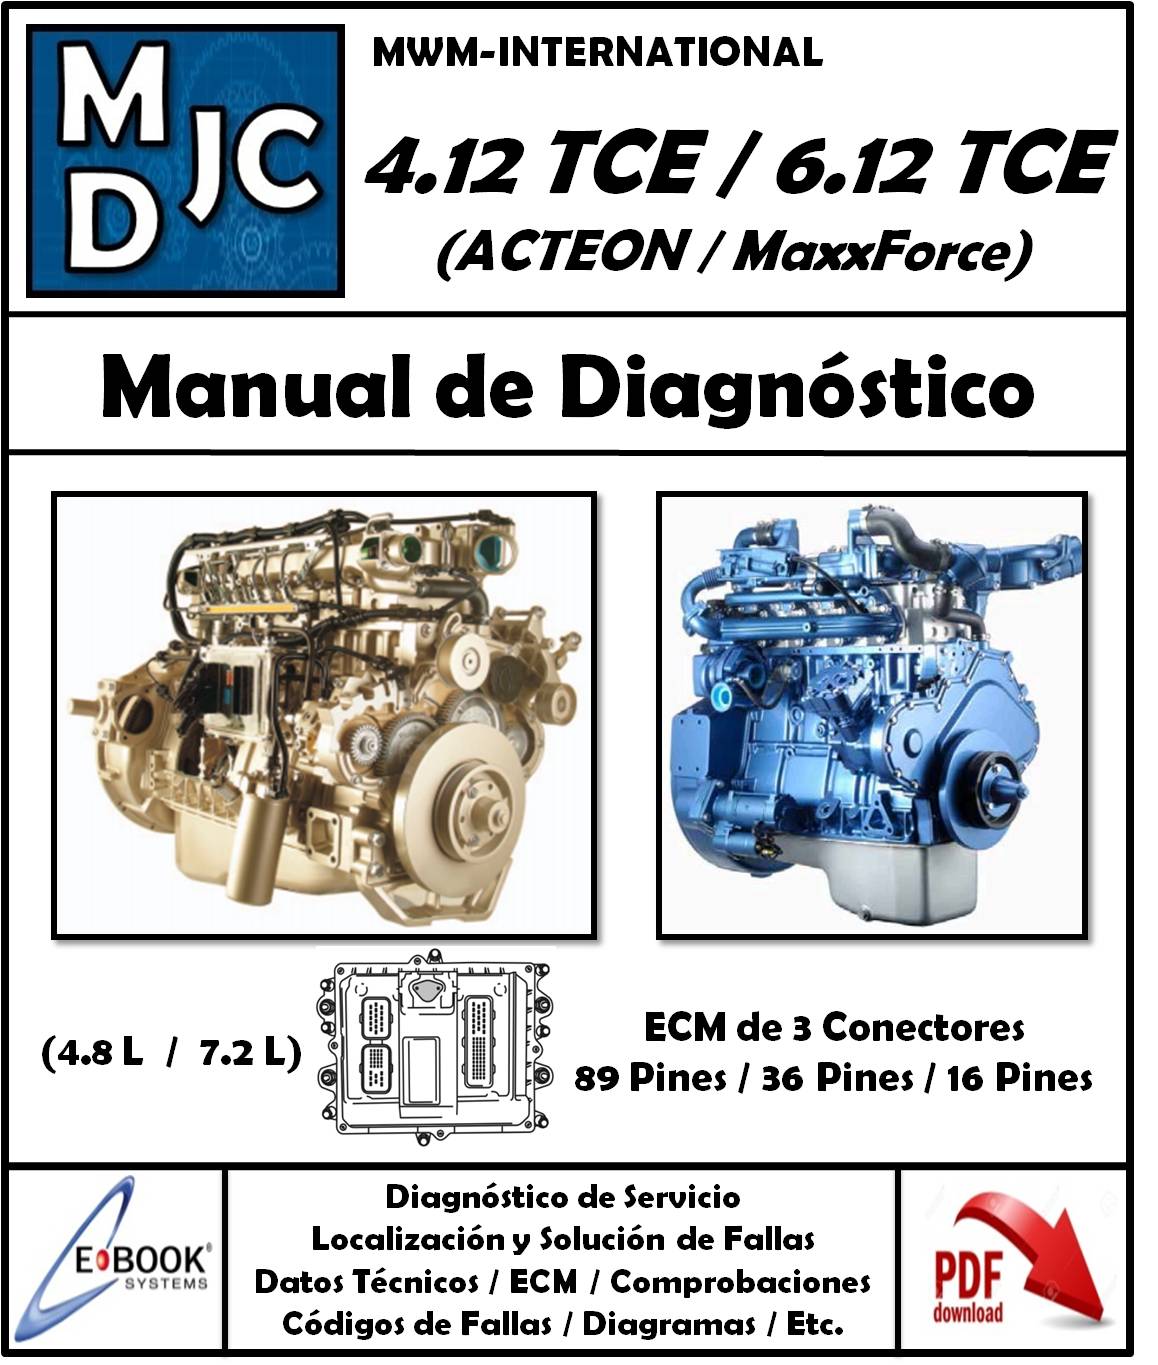 Manual de Diagnóstico Motor International MWM Acteon / Maxxforce / 4.12 TCE / 6.12 TCE